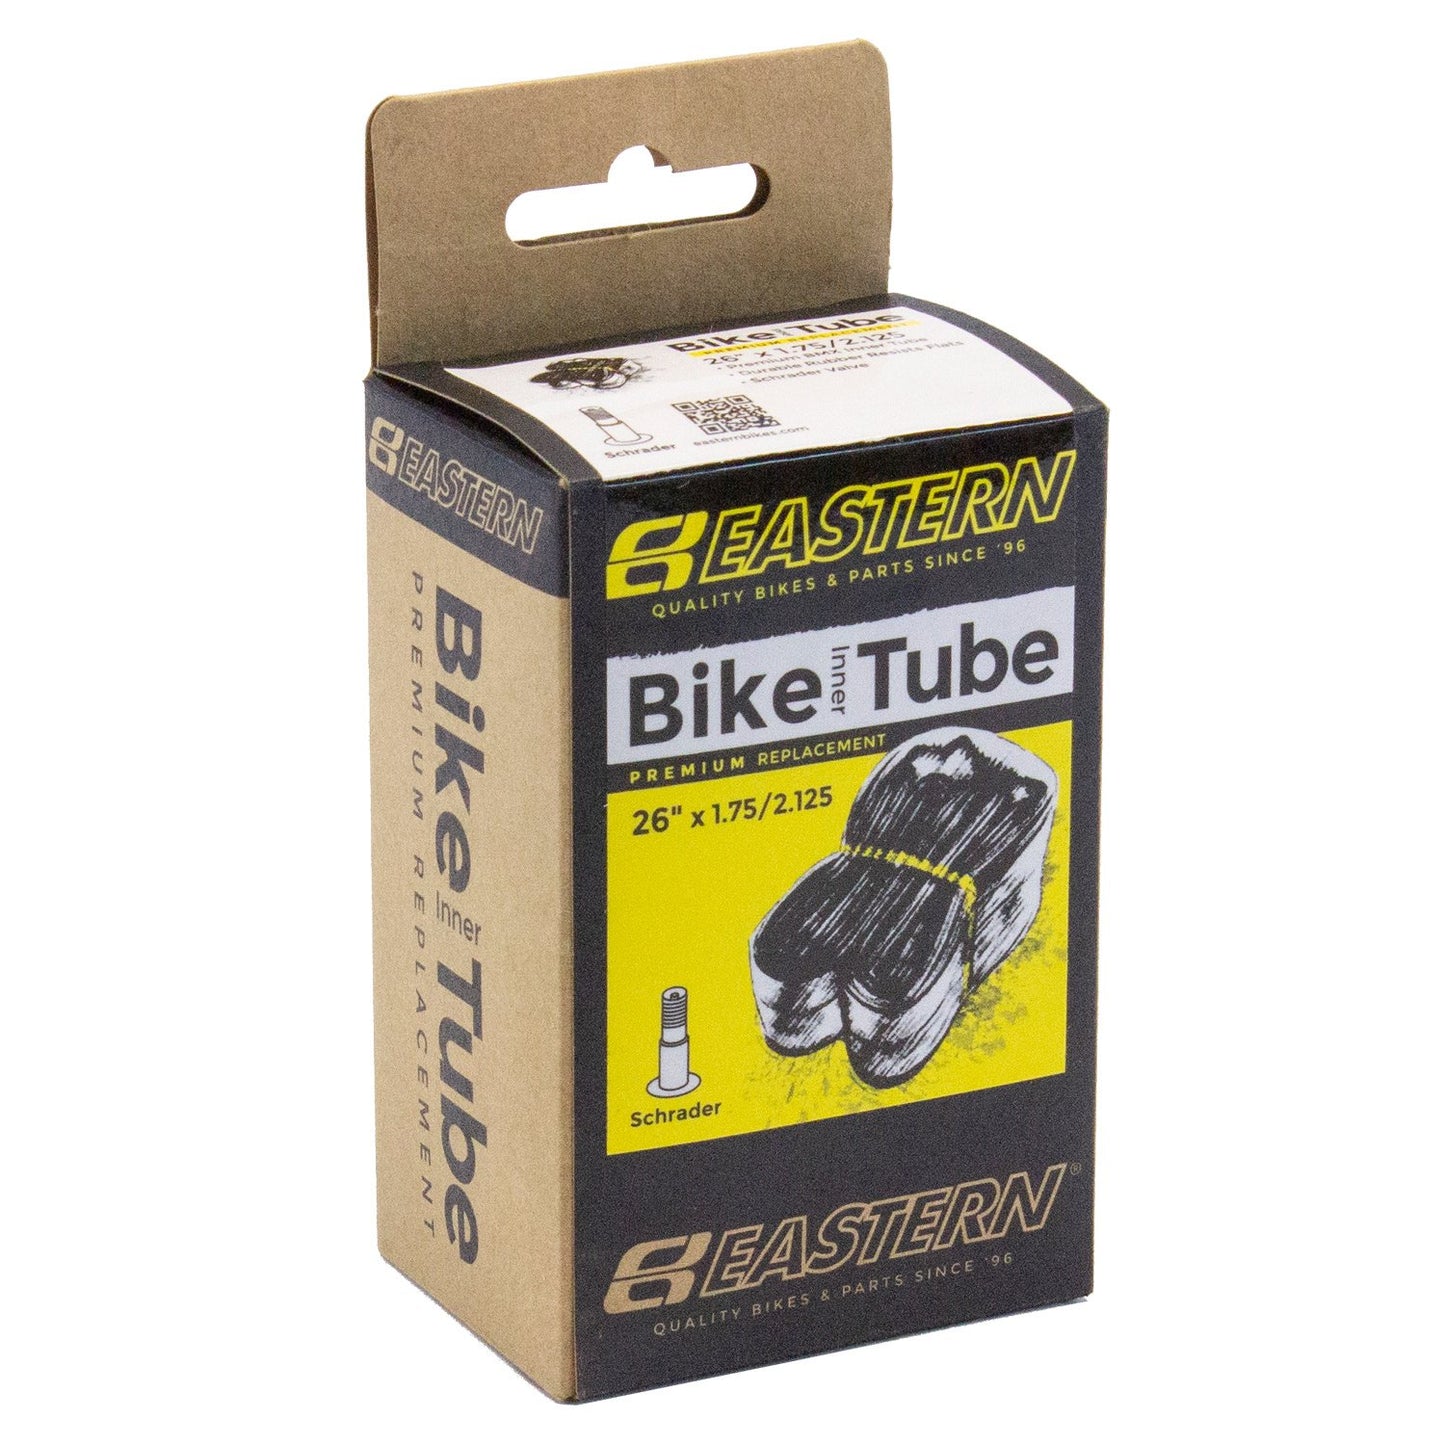 eastern bikes 26 inch schrader bike tube